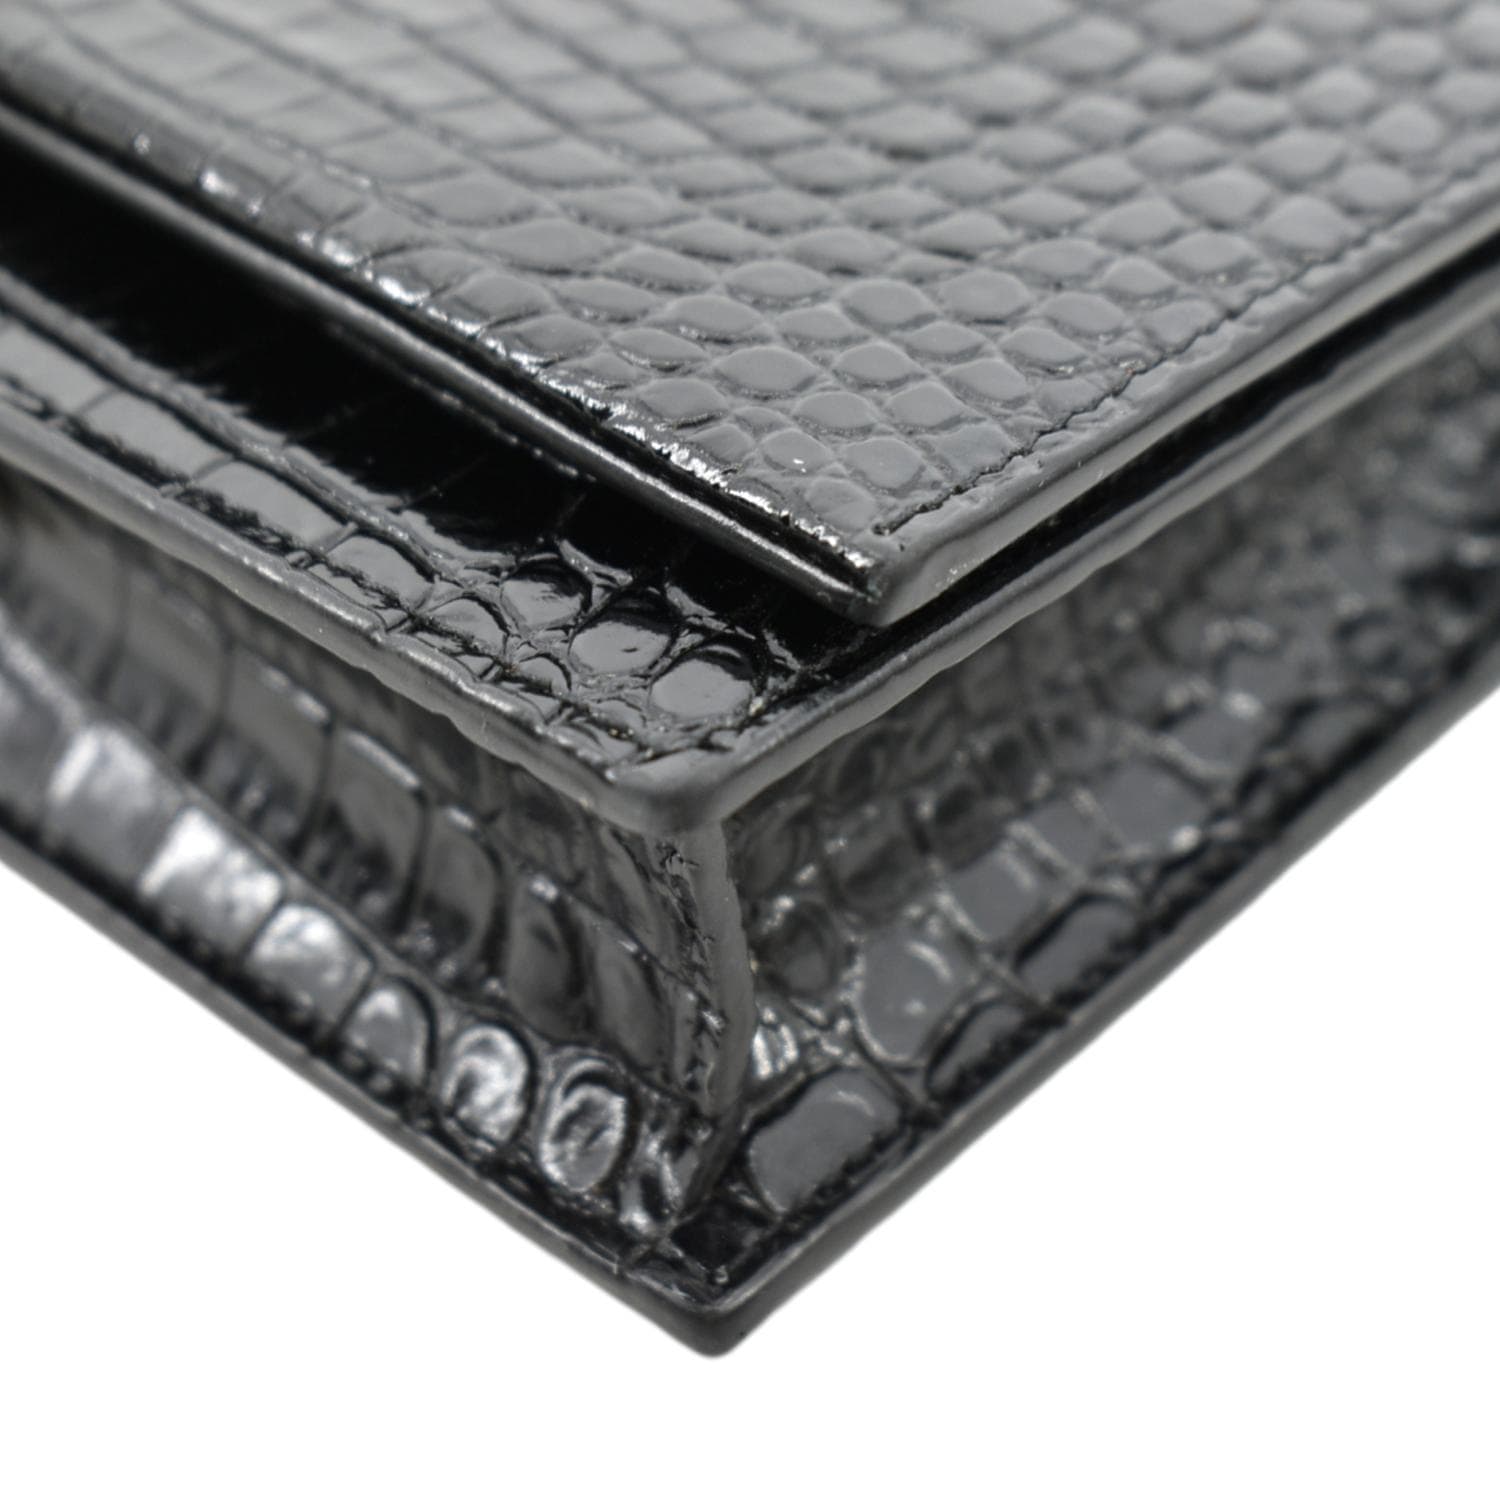 Yves Saint Laurent Black Croc Embossed Patent Leather Small